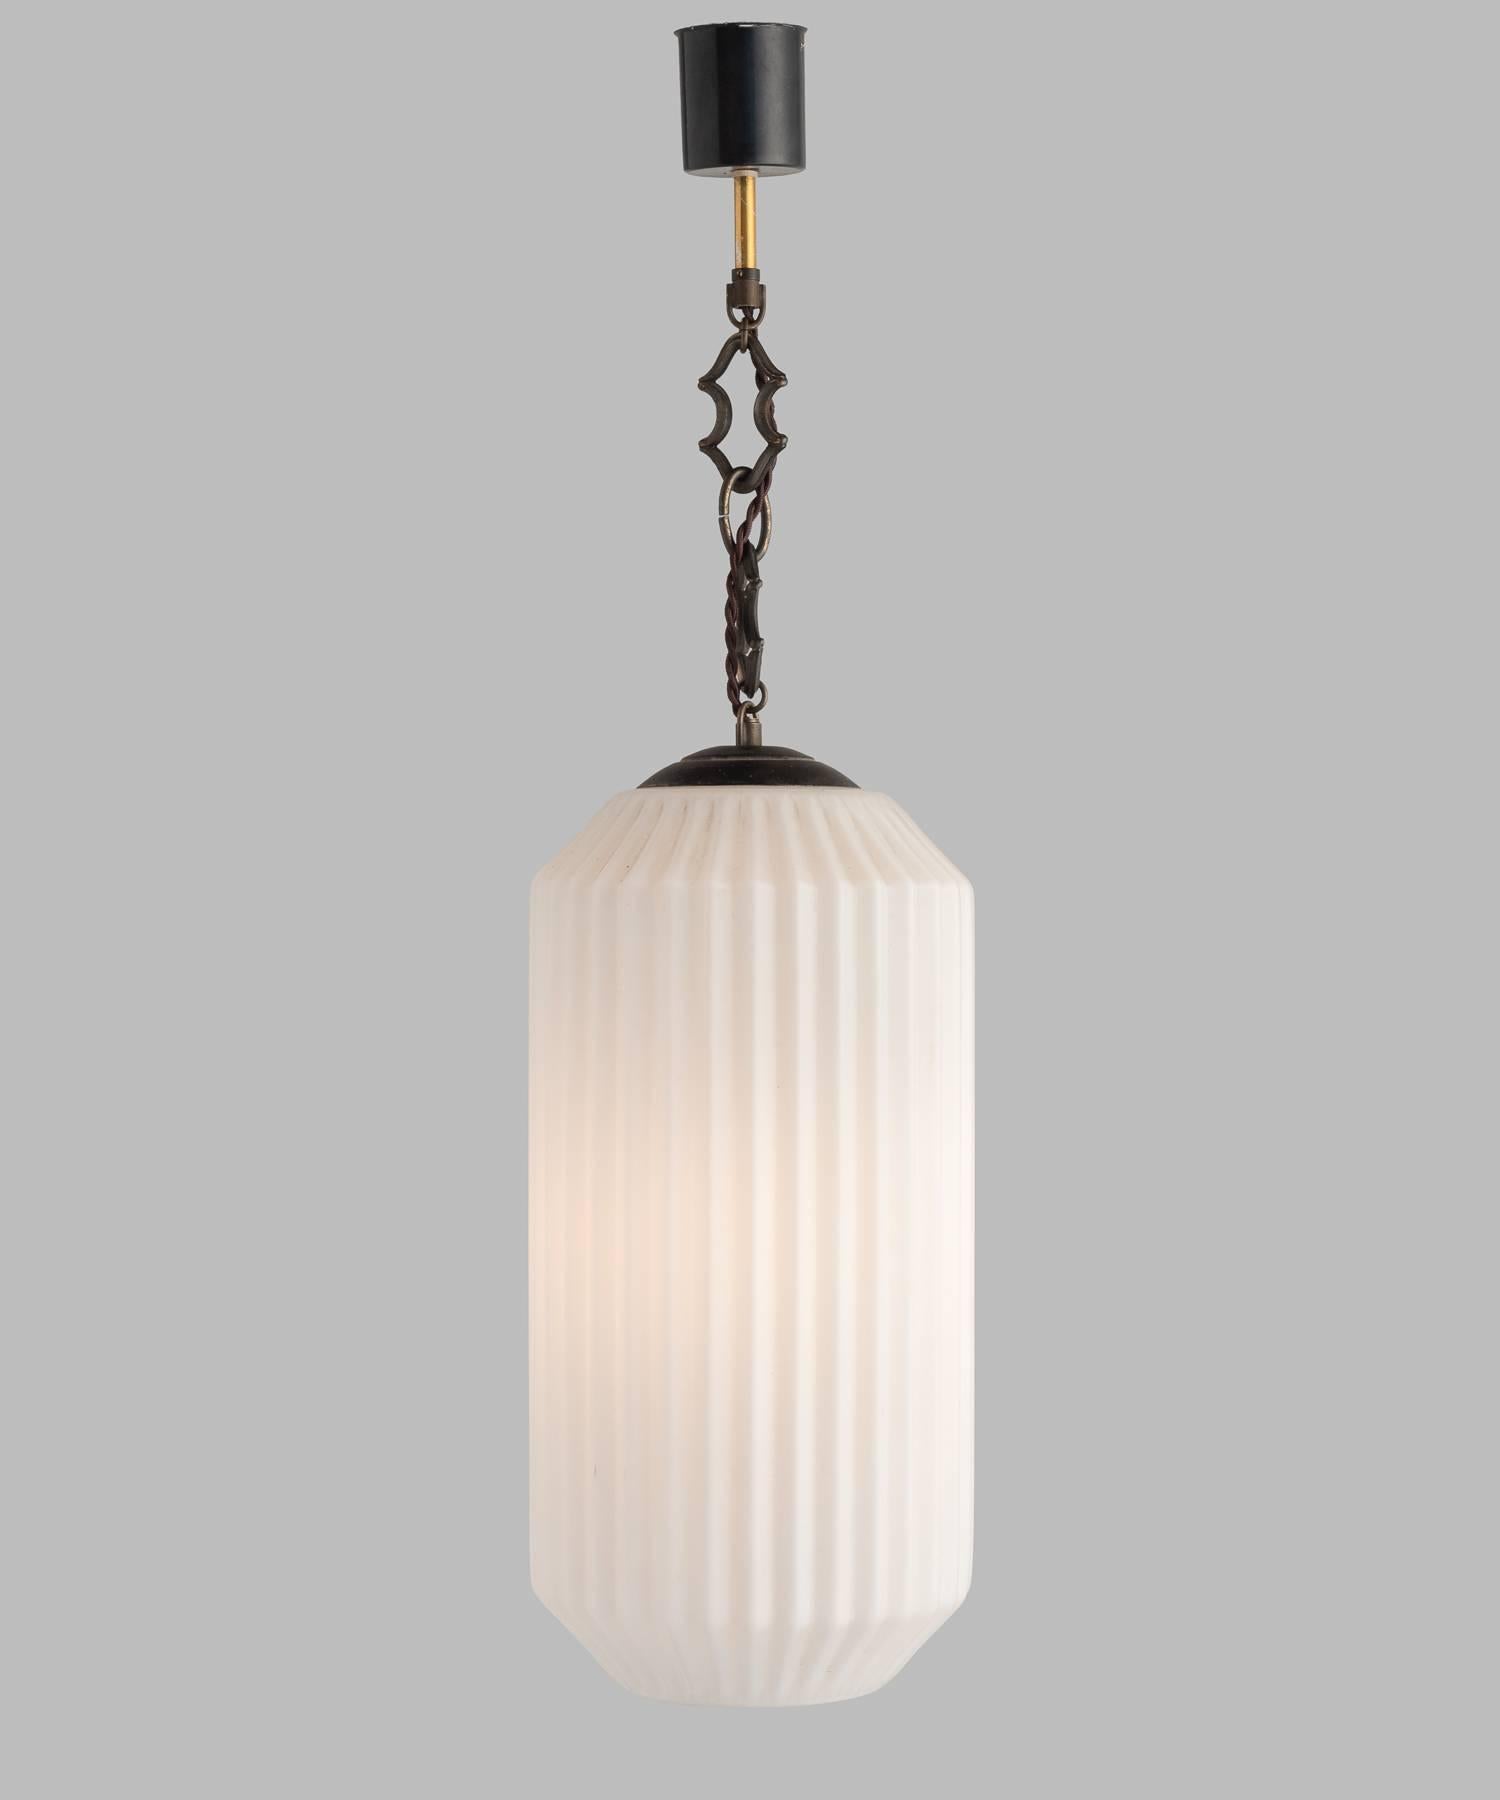 1930 pendant lighting